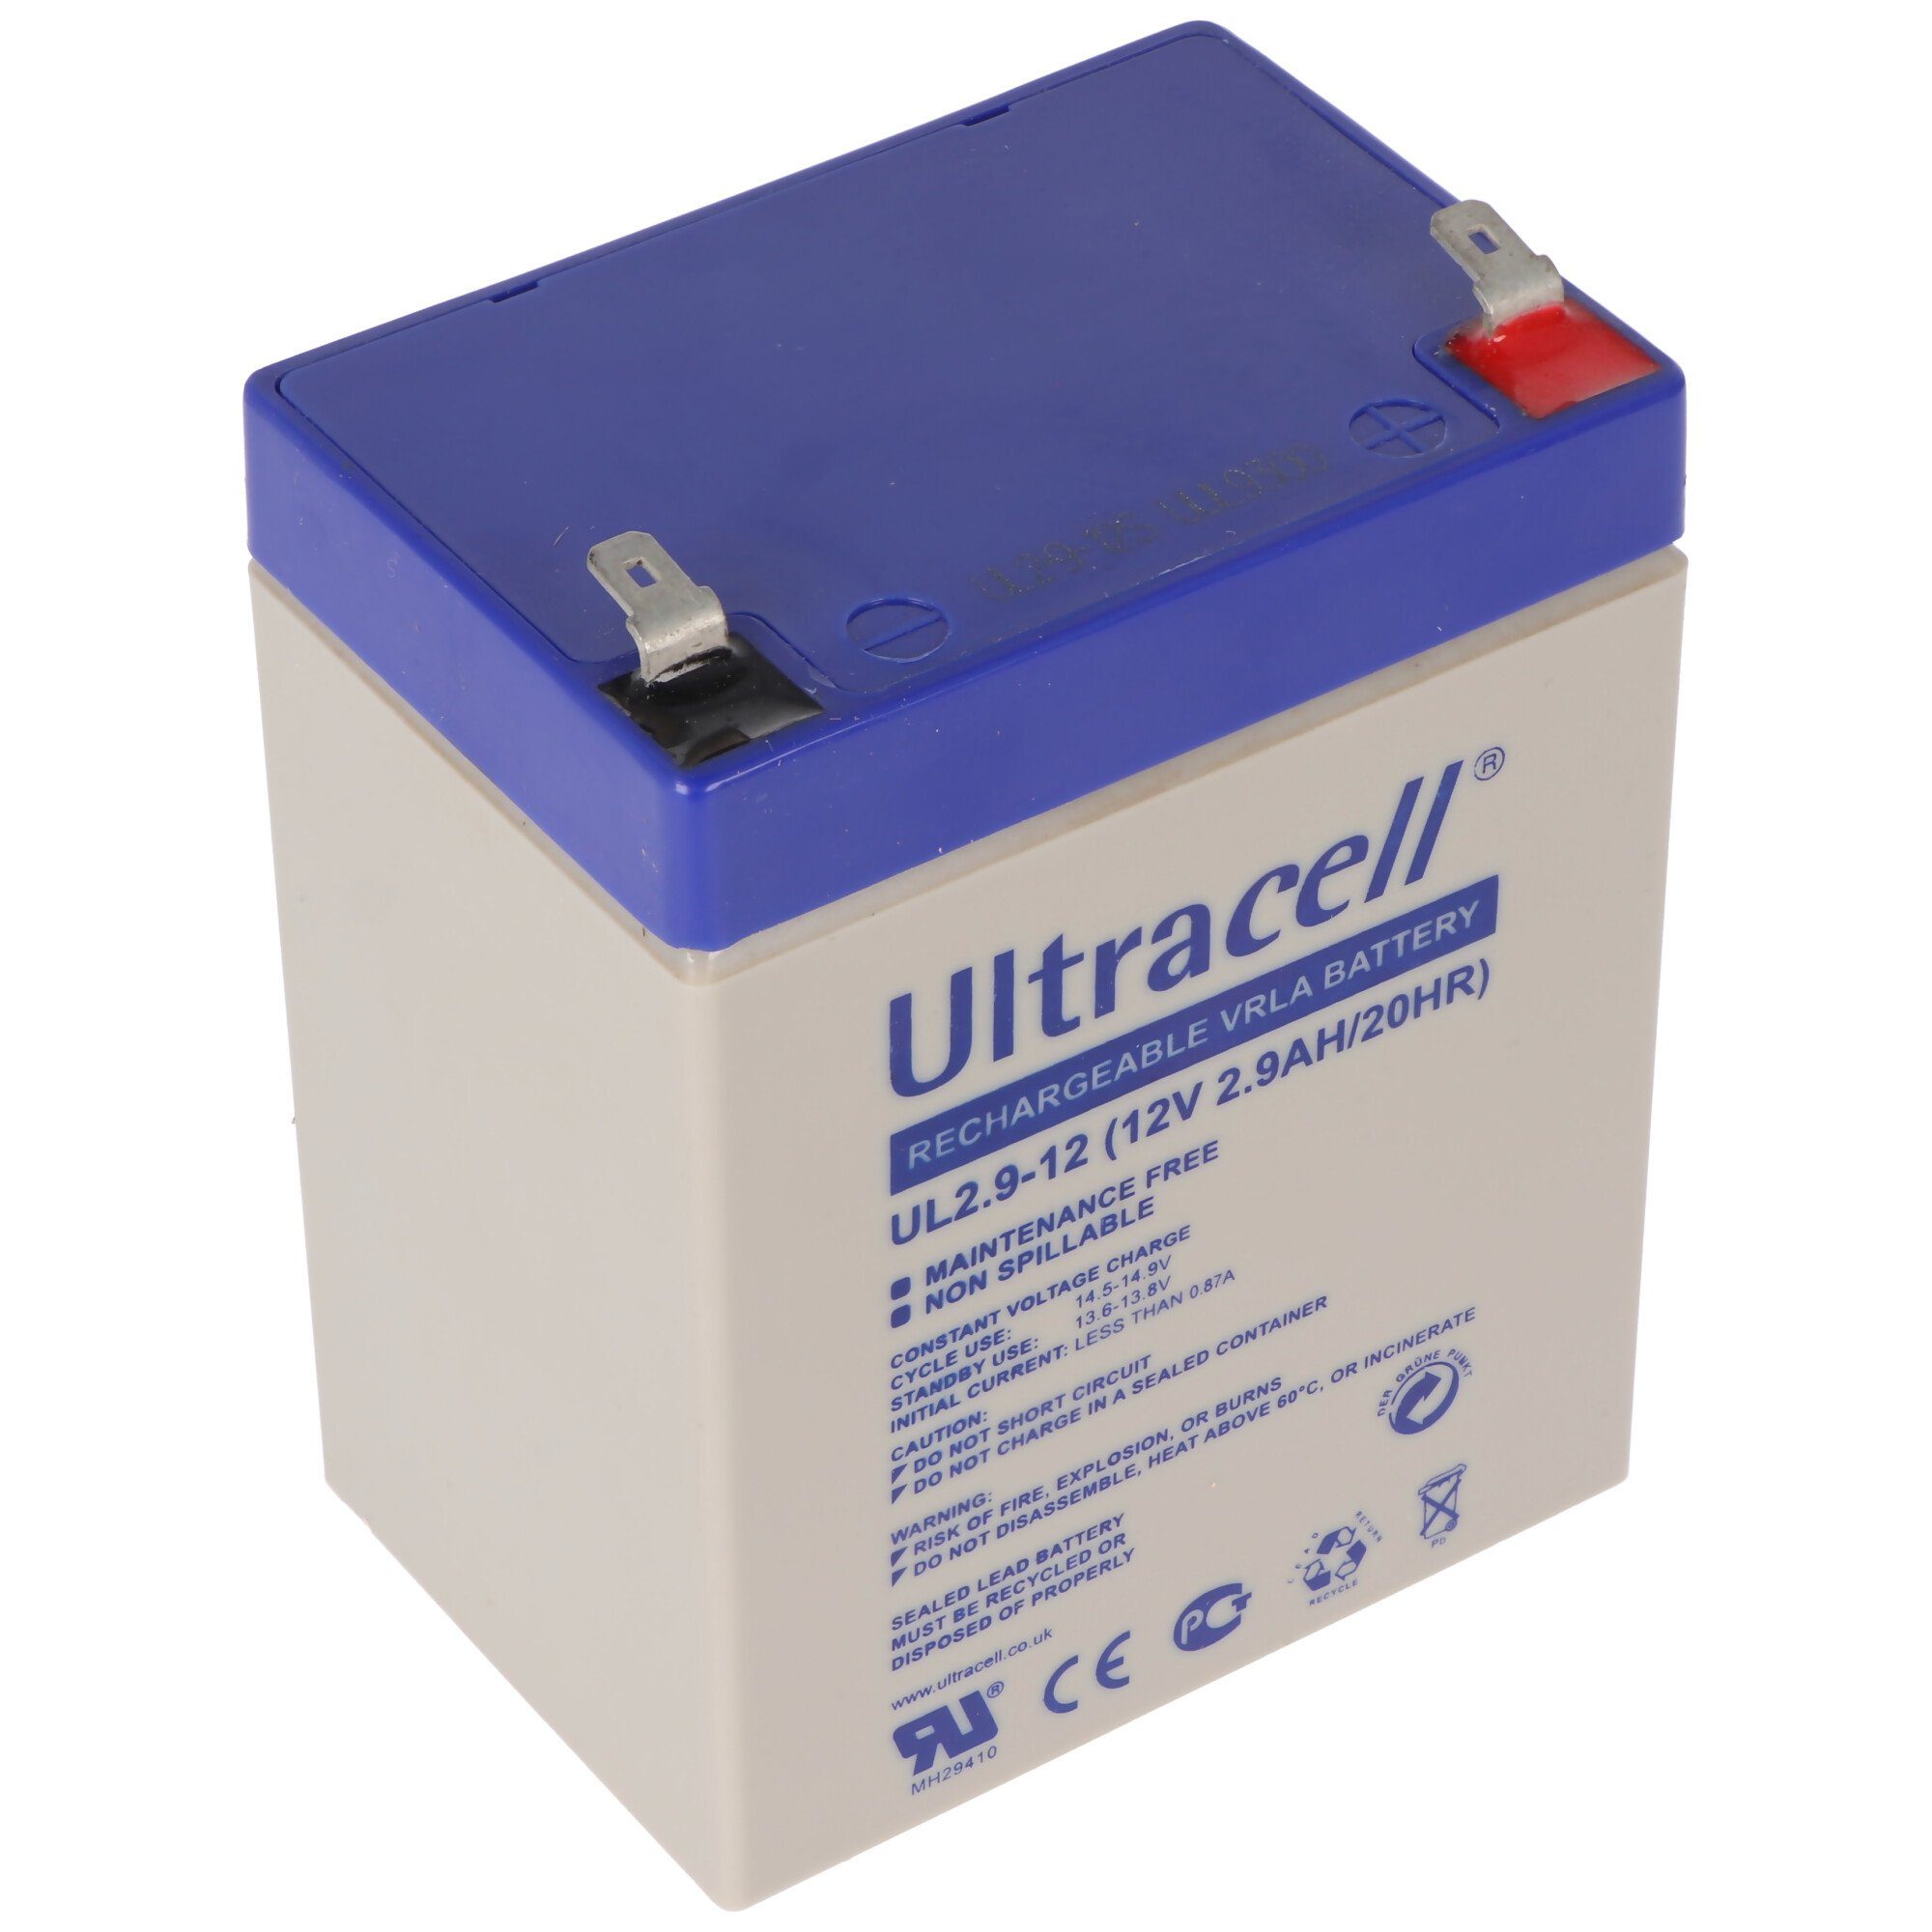 Ultracell Ultracell UL2.9-12 12V 2,9Ah Bleiakku AGM Blei Gel Akku